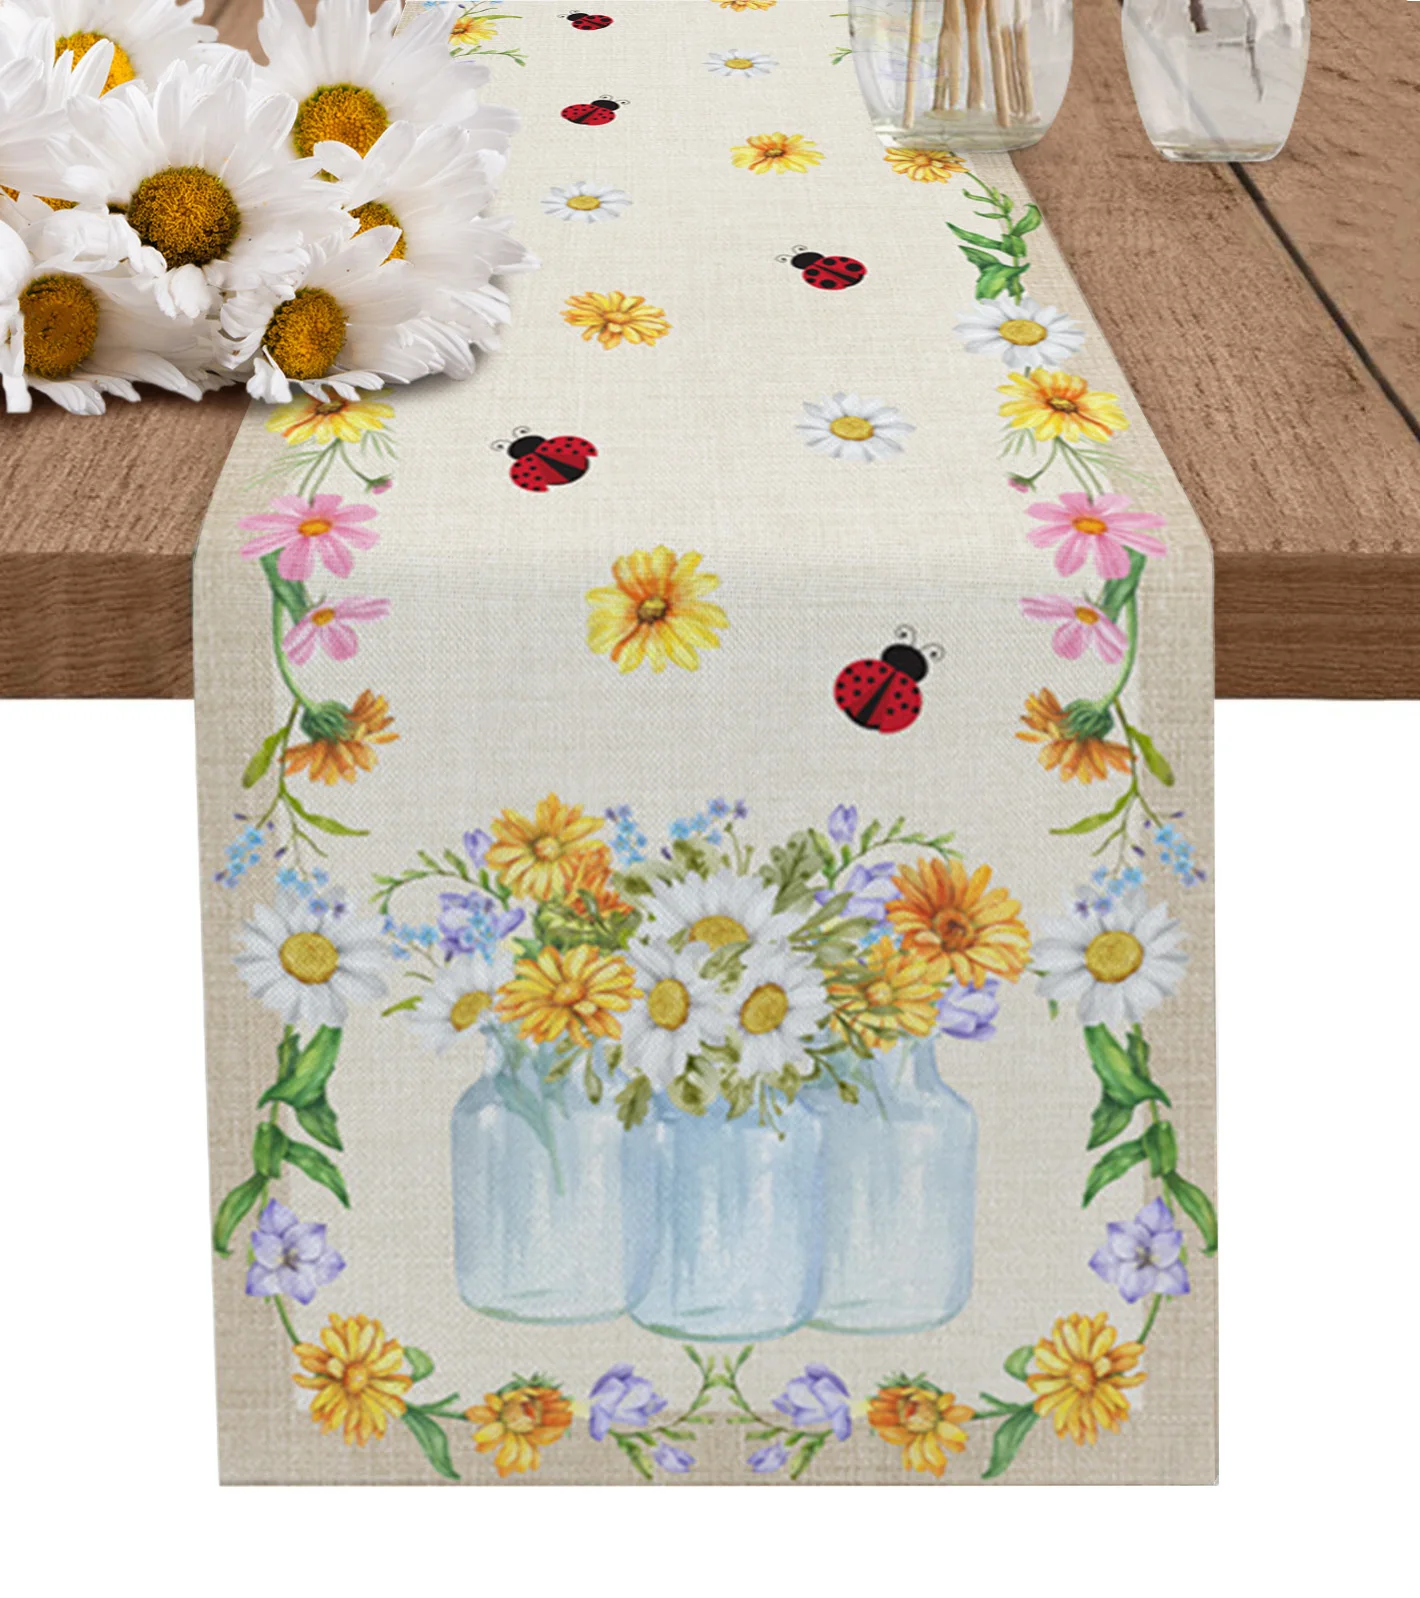 

Summer Ladybug Vase Daisy Flower Table Runner luxury Kitchen Dinner Table Cover Wedding Party Decor Cotton Linen Tablecloth